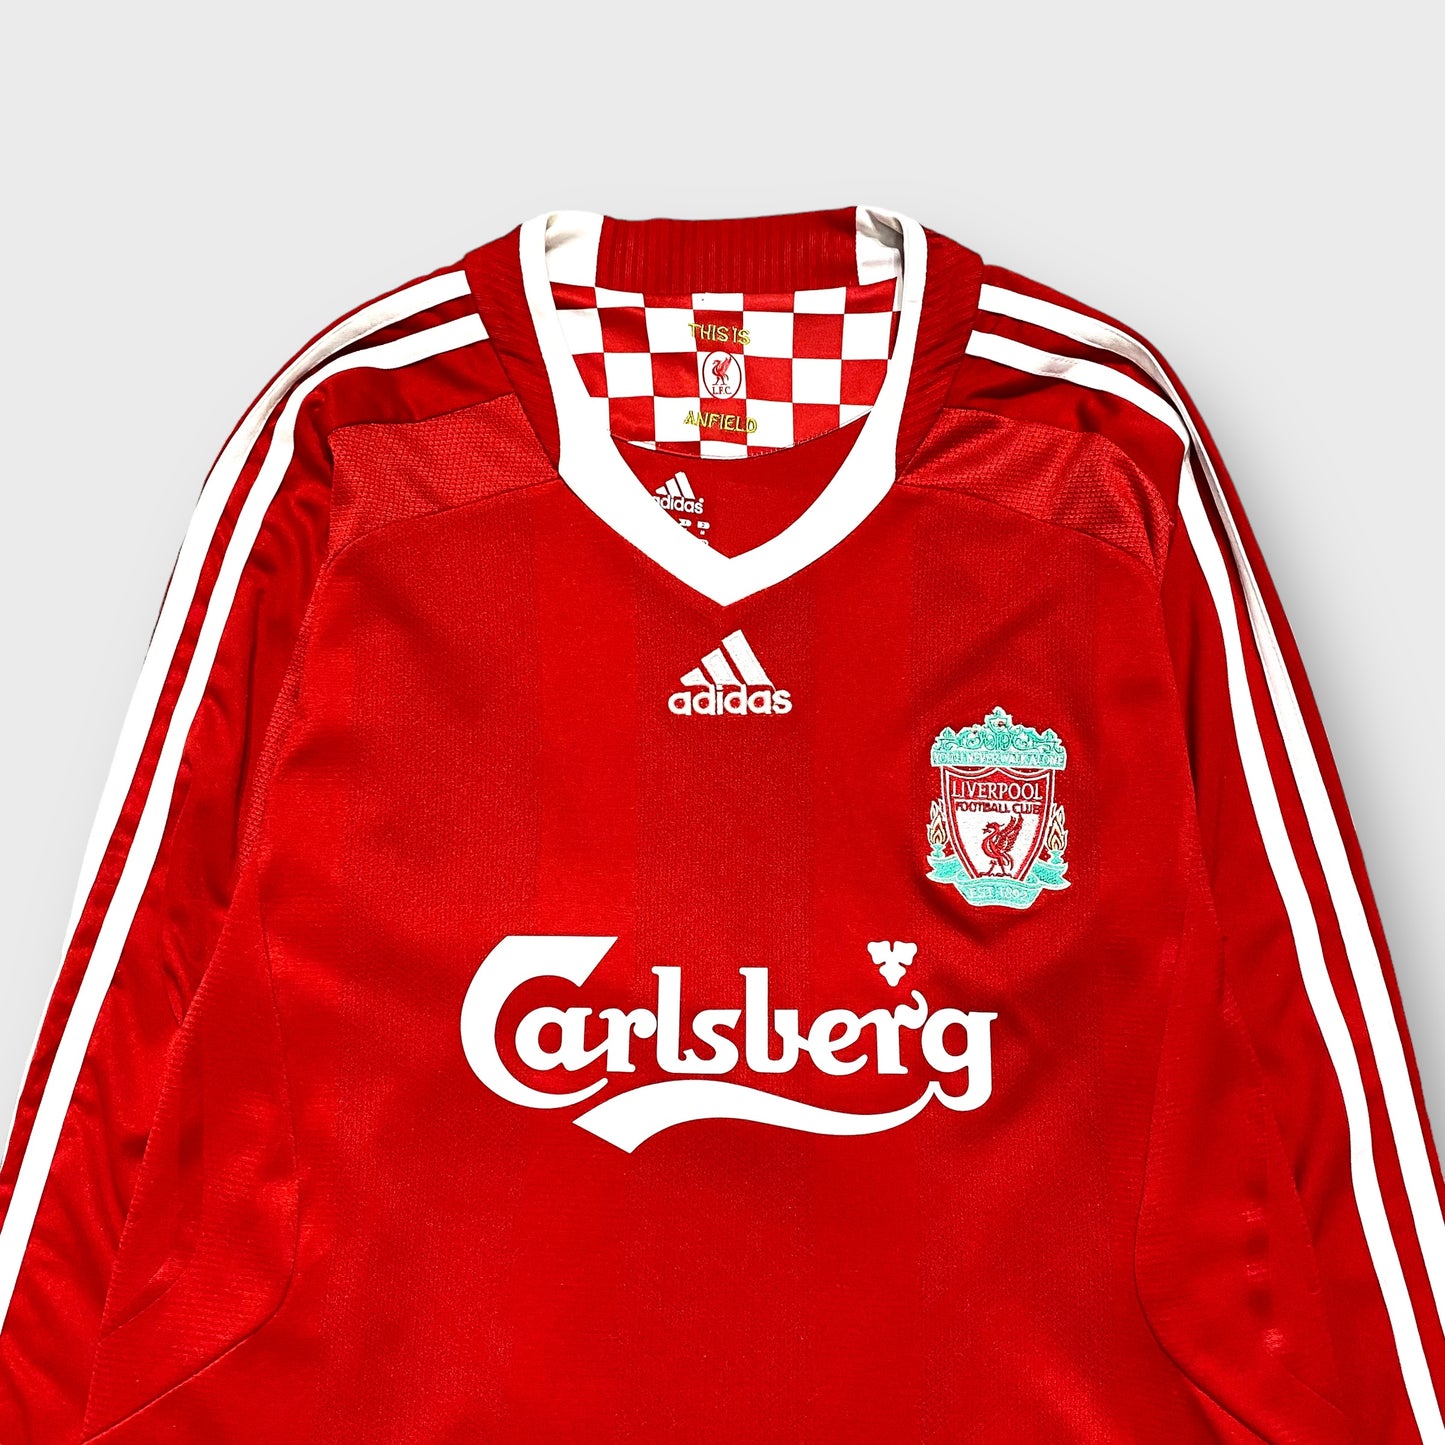 2008/2009 "adidas" Liverpool game shirt